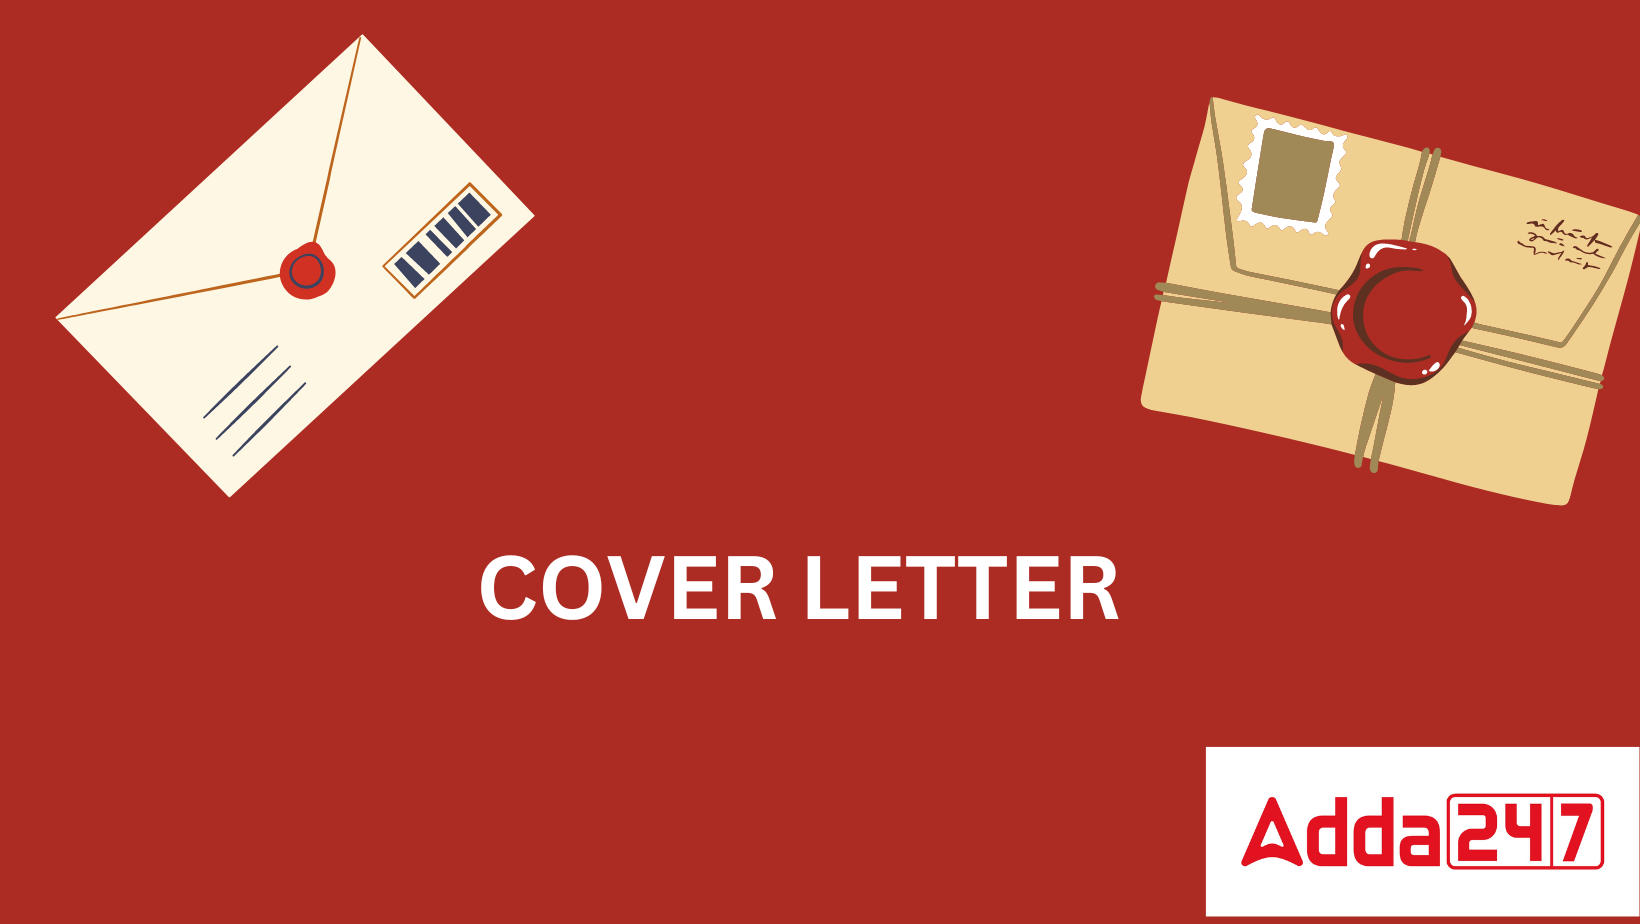 Cover Letter, Sample, Example, for Jobs Resume_30.1